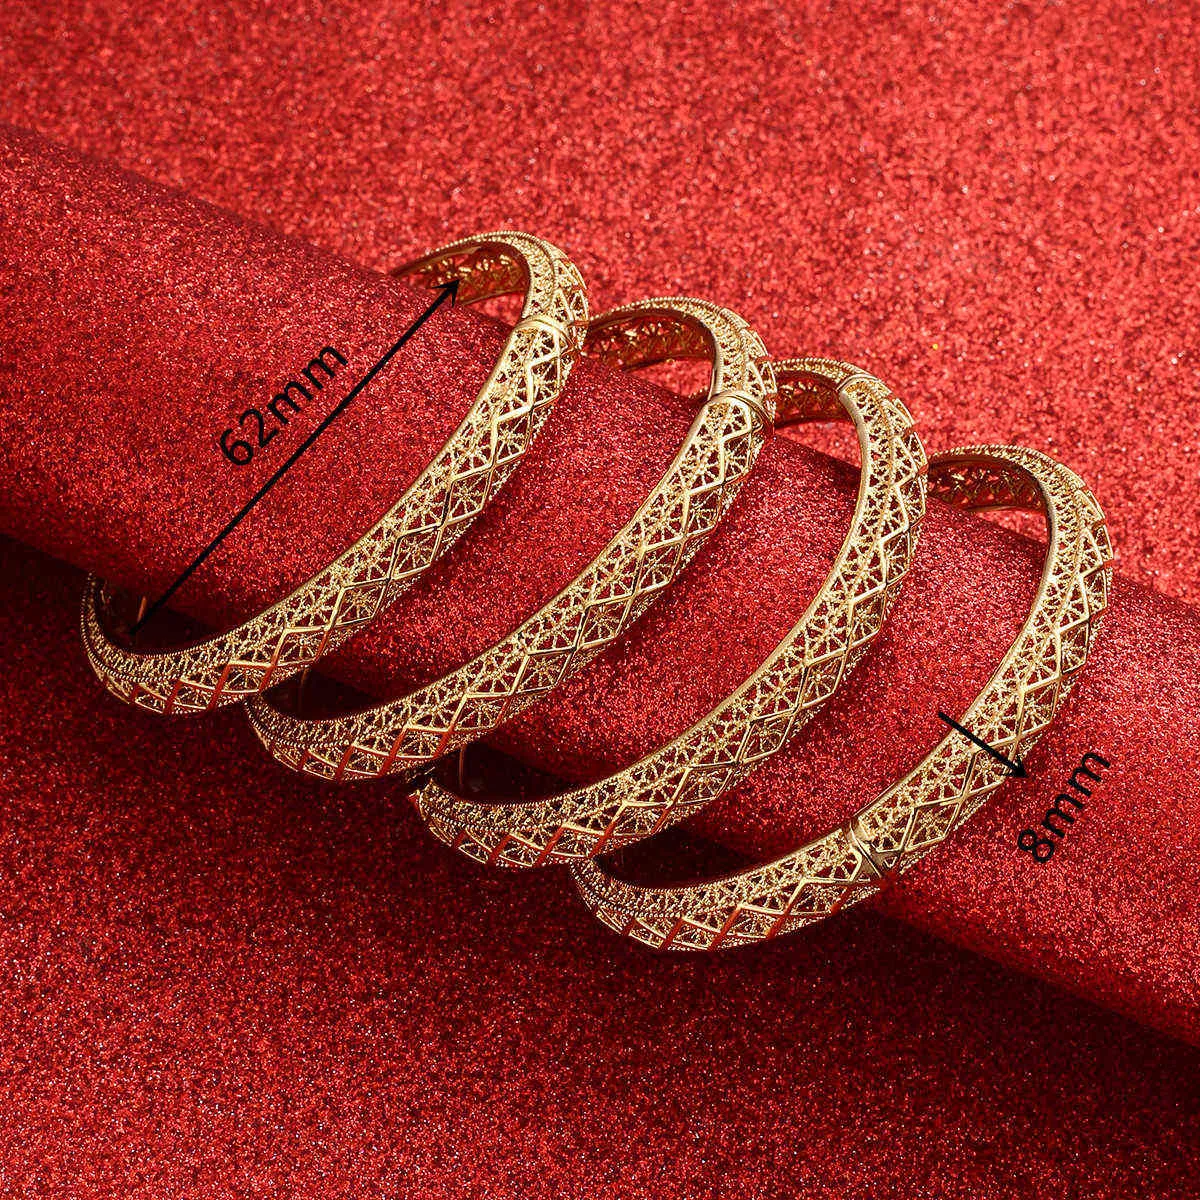 Dubai Gold Bangles voor Vrouwen Mannen 24 K Kleur Ethiopische Armbanden Afrikaanse Sieraden Saoedi-Arabische Bruiloft Bruid Gift Q0717